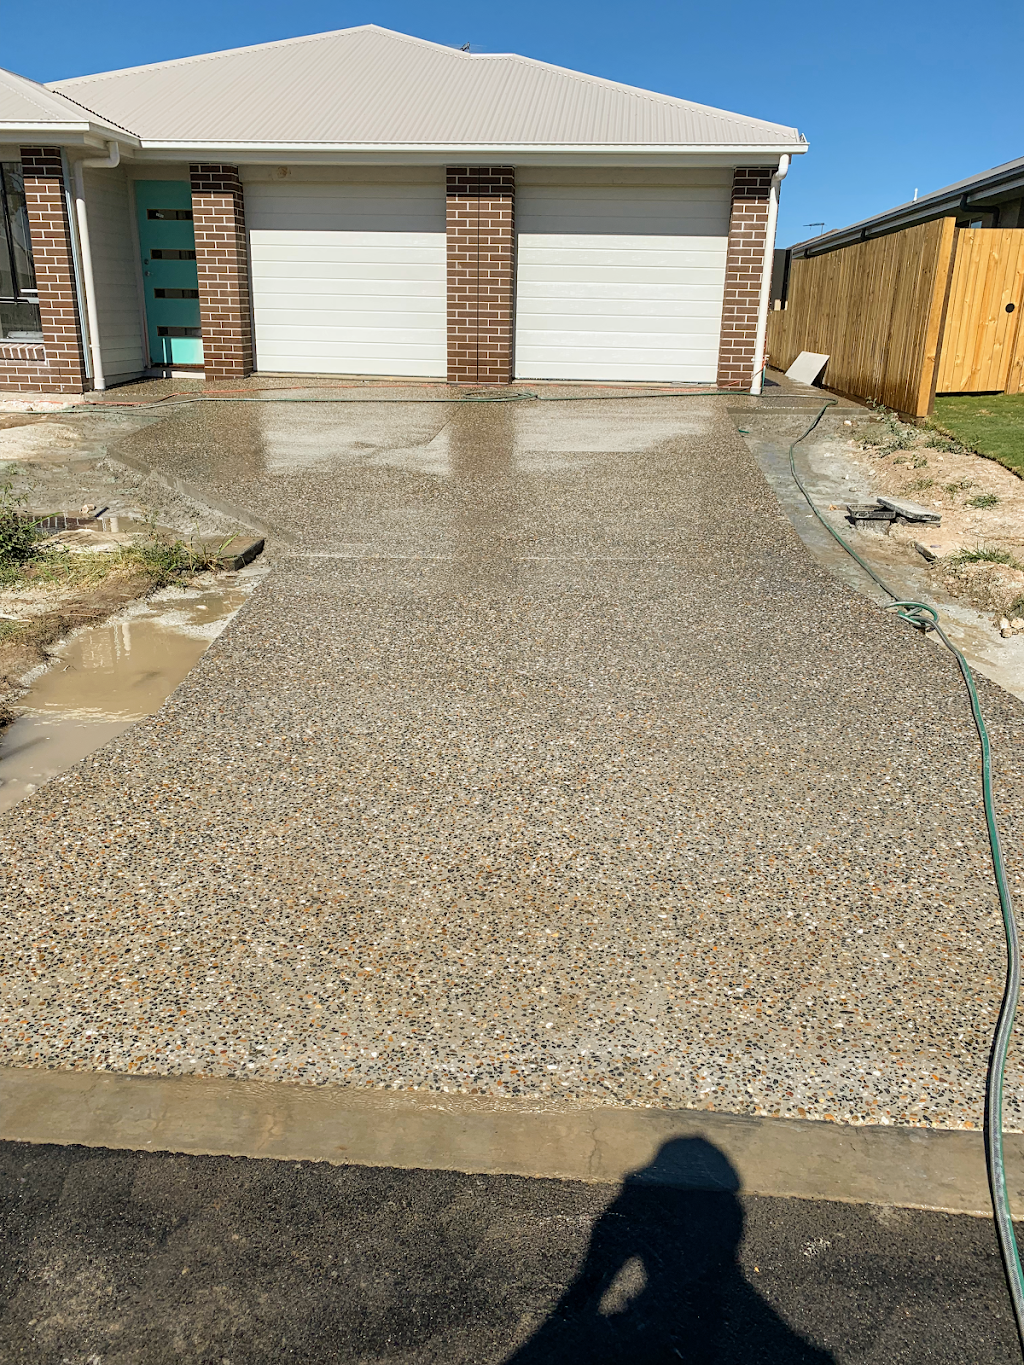 Allwayz Concrete PTY LTD | general contractor | Oxenford QLD 4210, Australia | 0420633075 OR +61 420 633 075